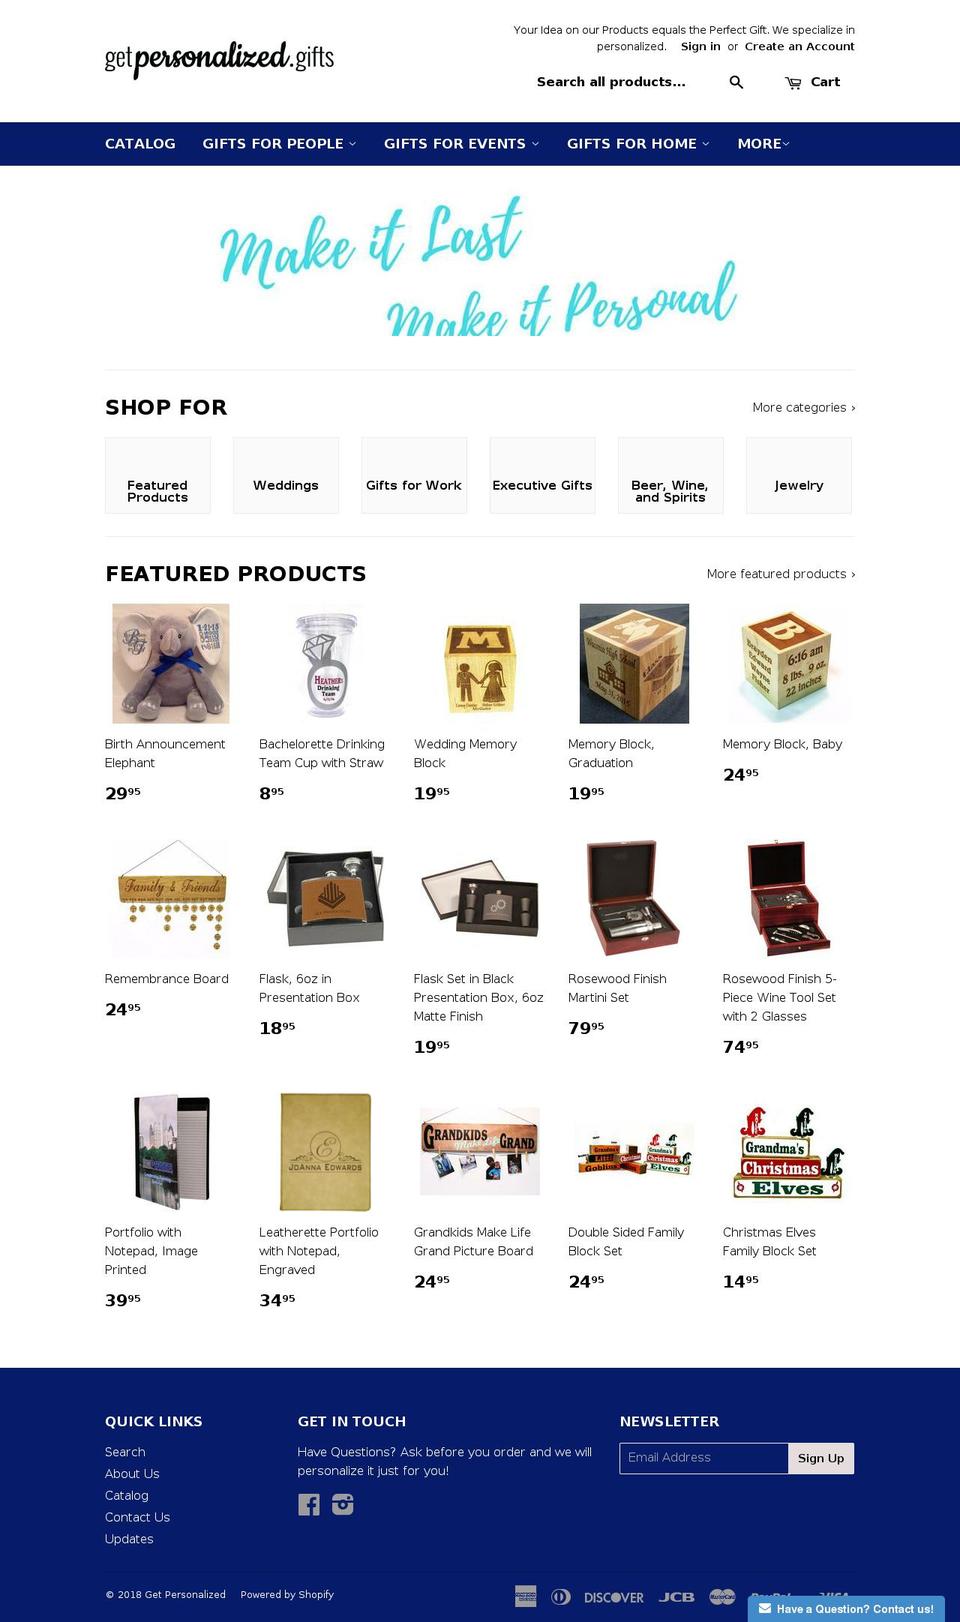 getpersonalized.gifts shopify website screenshot